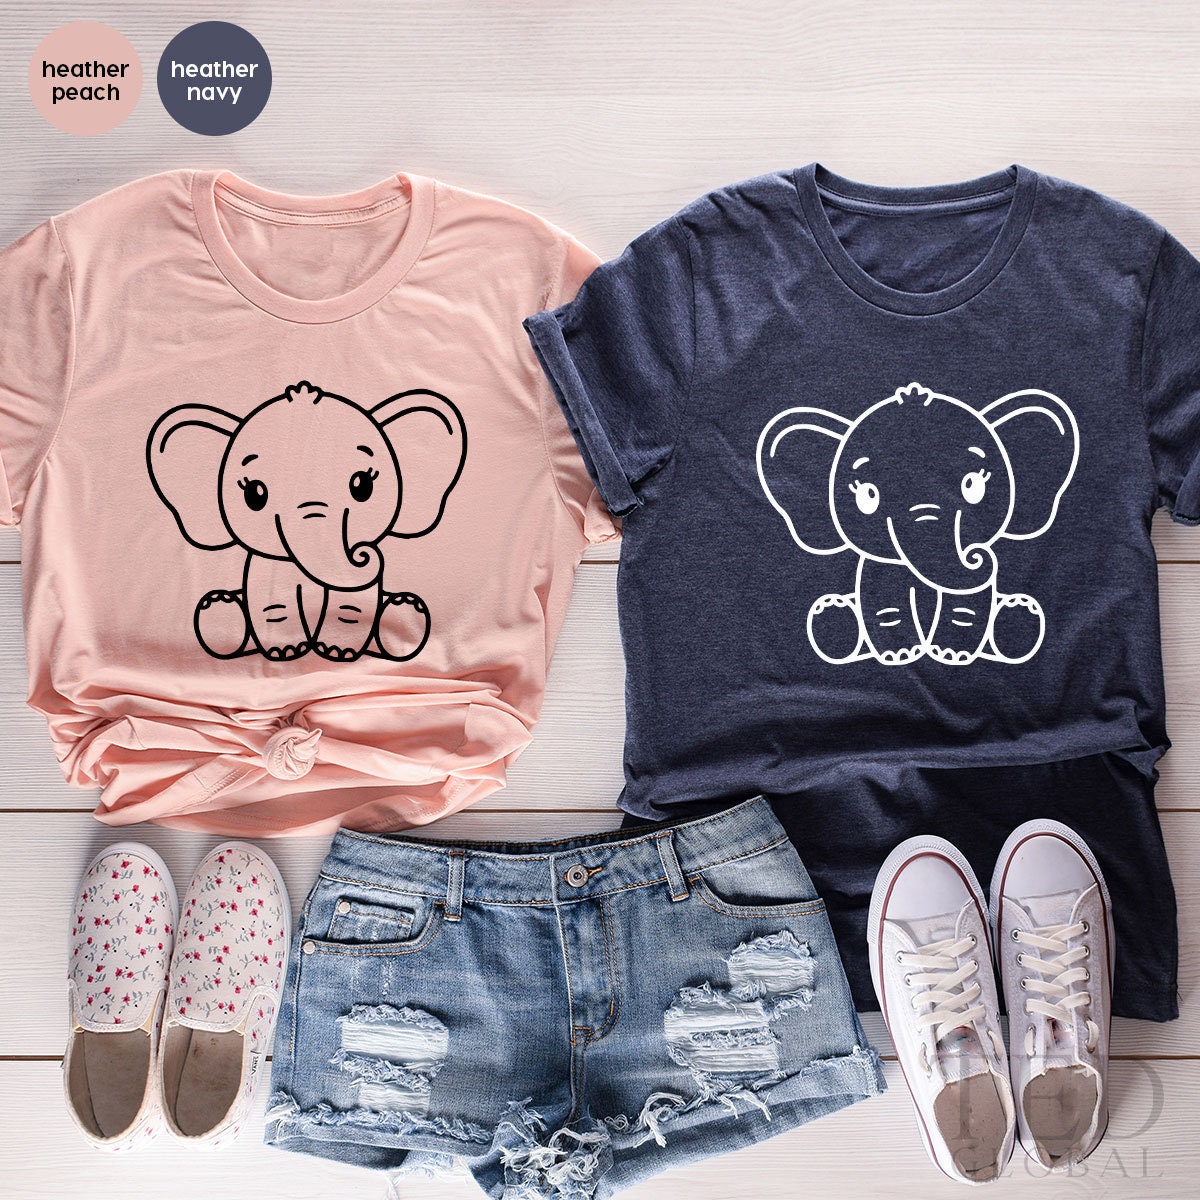 Elephant TShirt, Cute Elephant T Shirt, Elephant Shirt Toddler, Kids Birthday Gift, Baby Elephant T-Shirt, Animal Lover Tee, Elephant Outfit - Fastdeliverytees.com